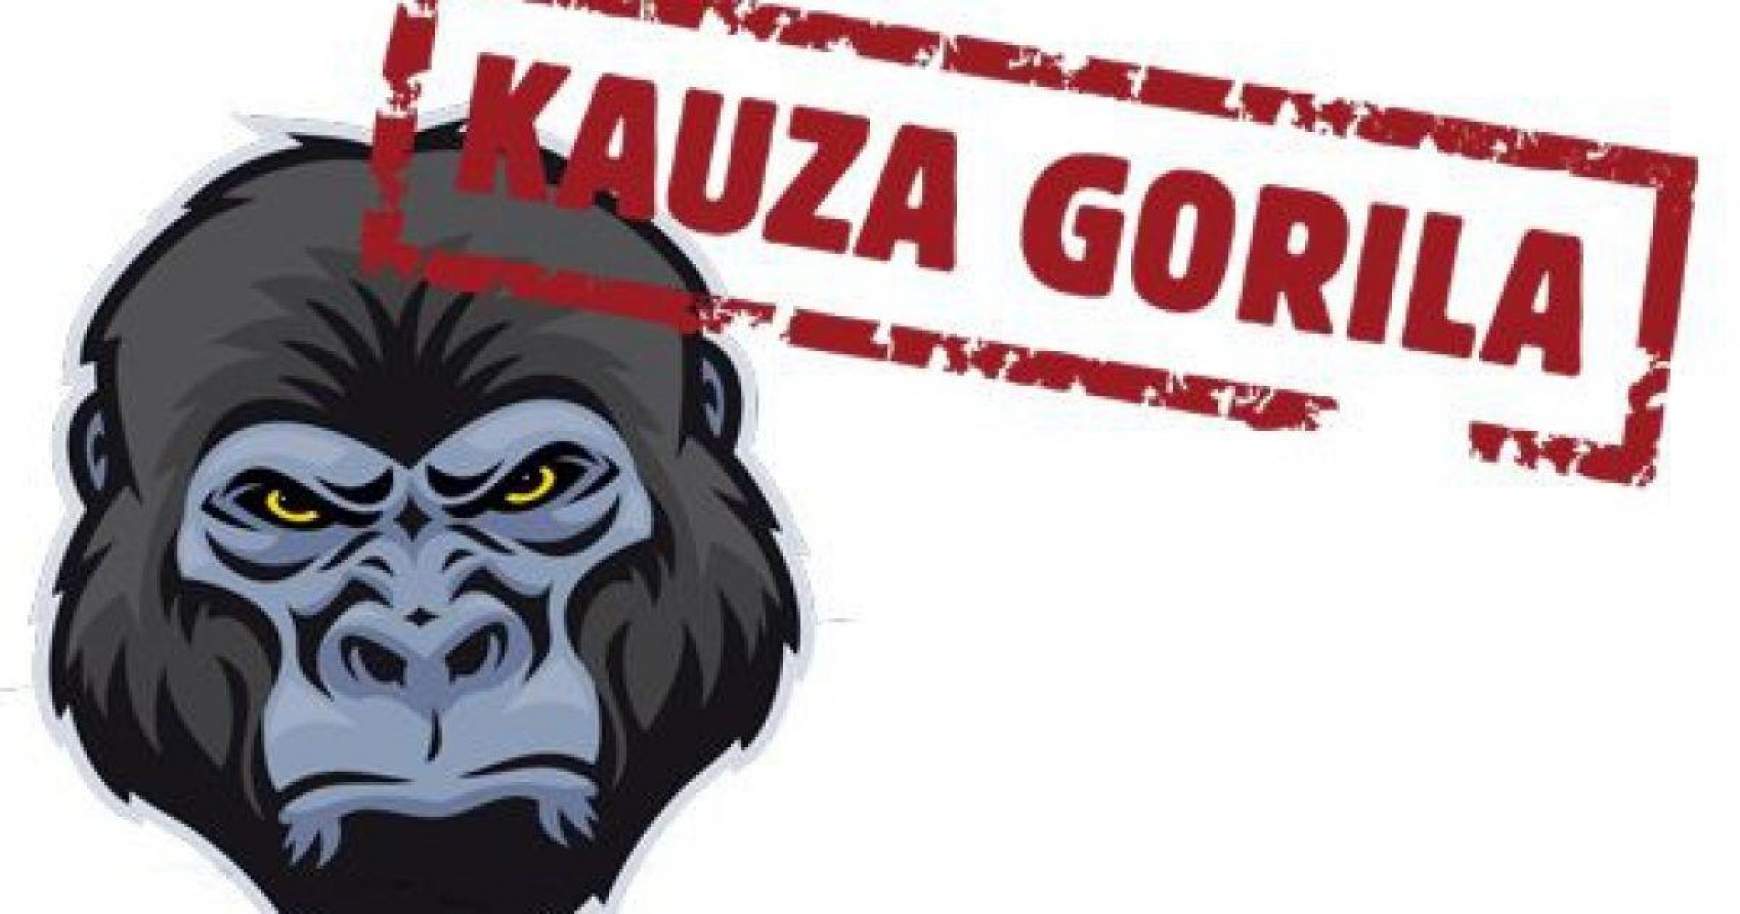 Gorilla-ügy_trnka